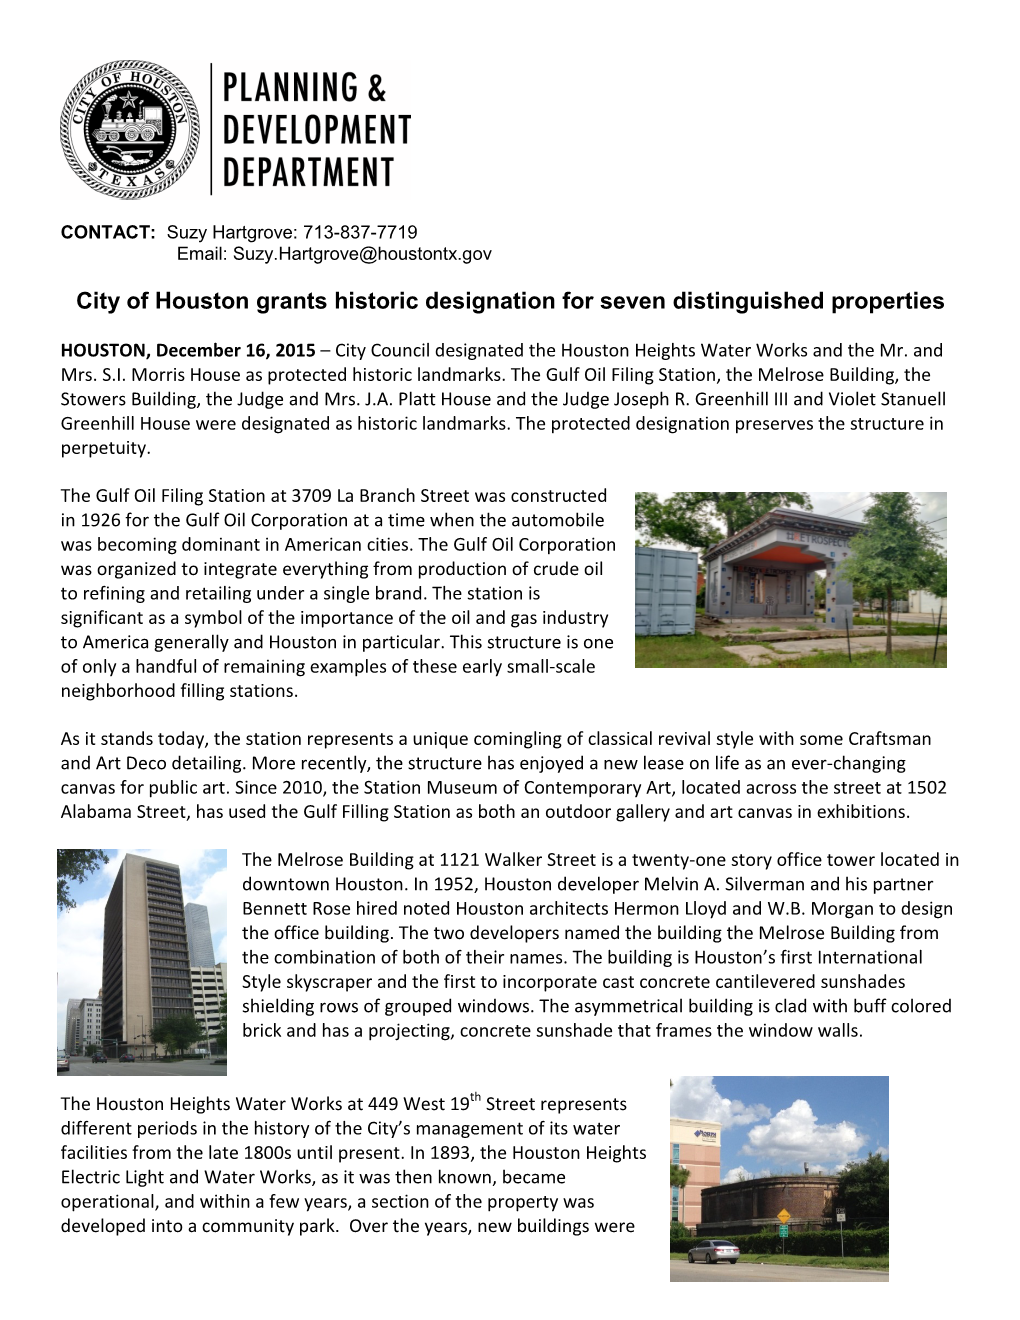 City of Houston Grants Historic Designation for Seven Distinguished Properties